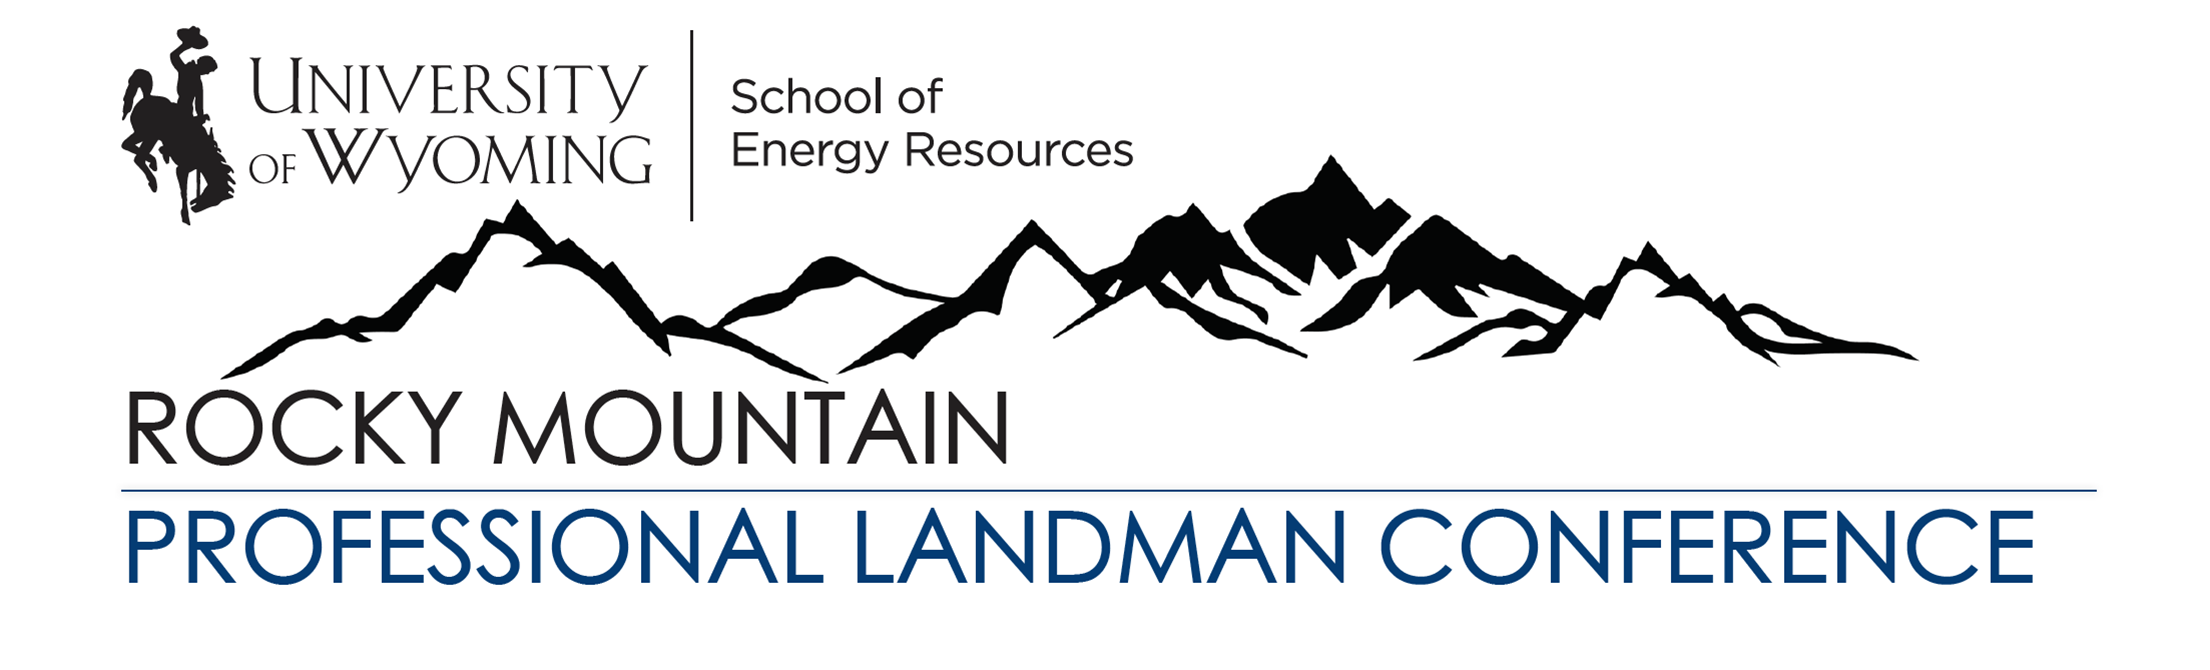 rocky mountain professional landman conference